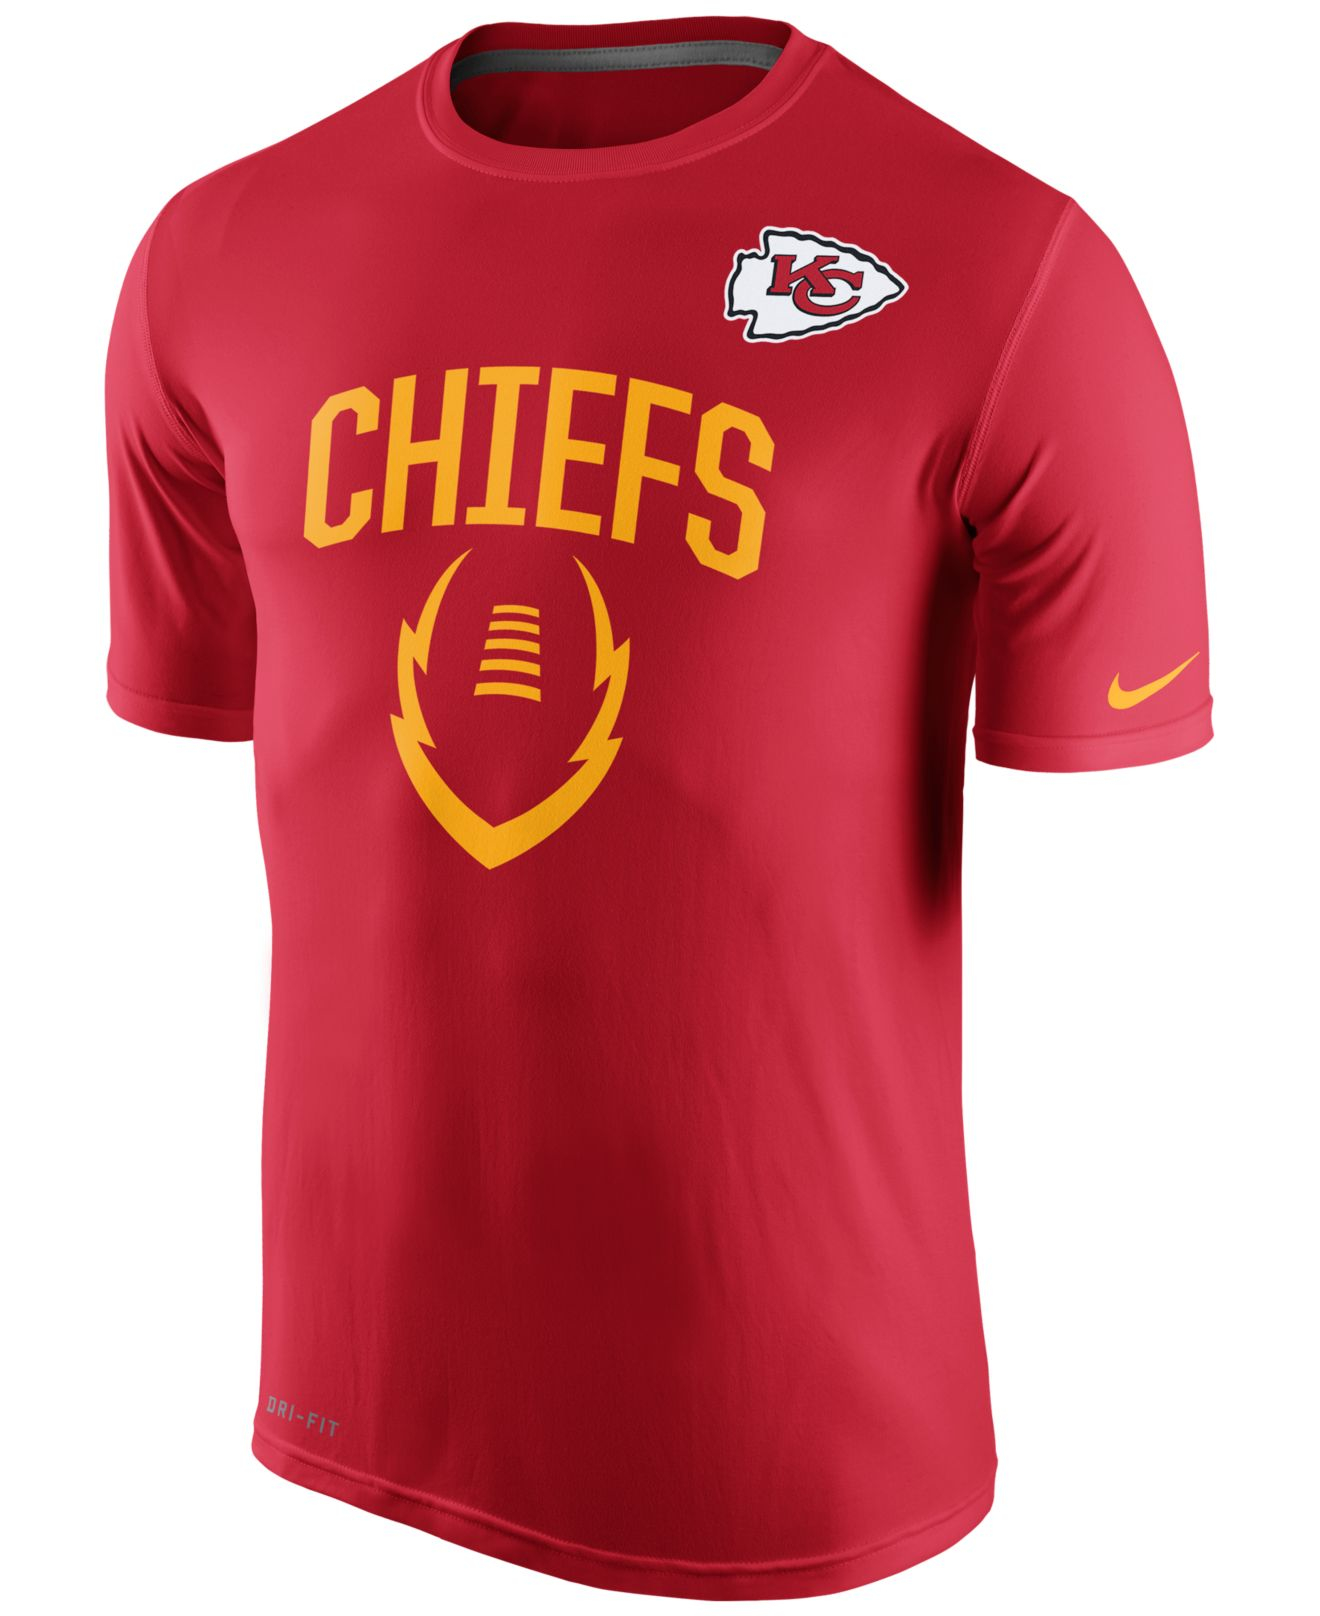 Lyst - Nike Men's Kansas City Chiefs Legend Icon T-shirt in Red for Men